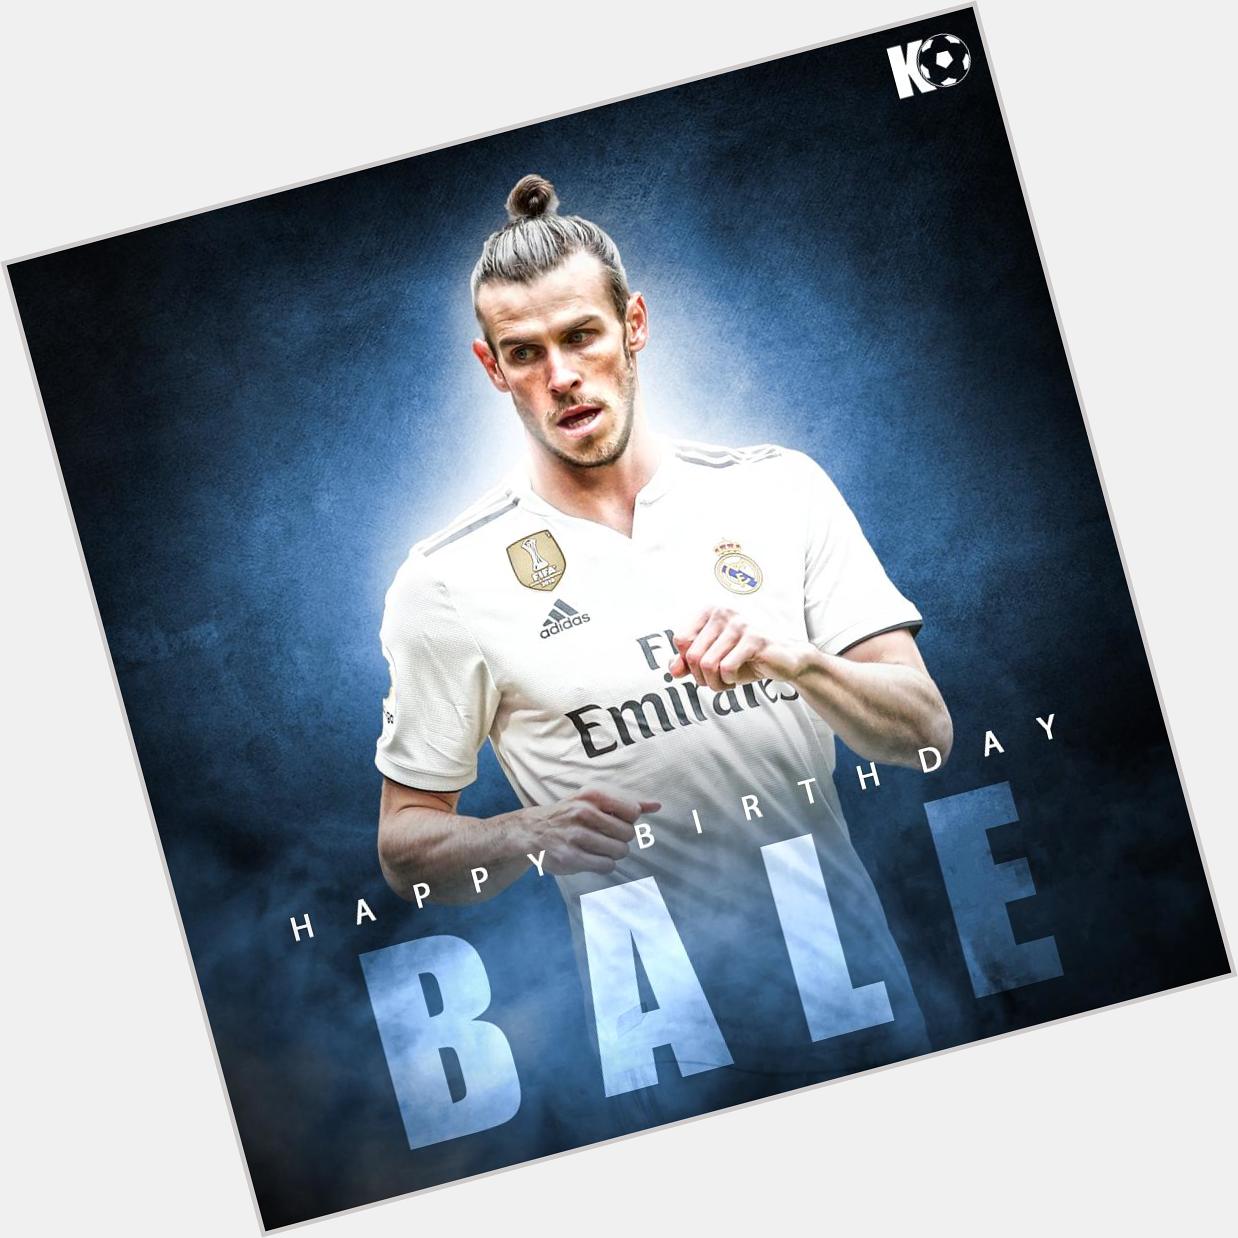 Join in wishing Gareth Bale a Happy Birthday! 